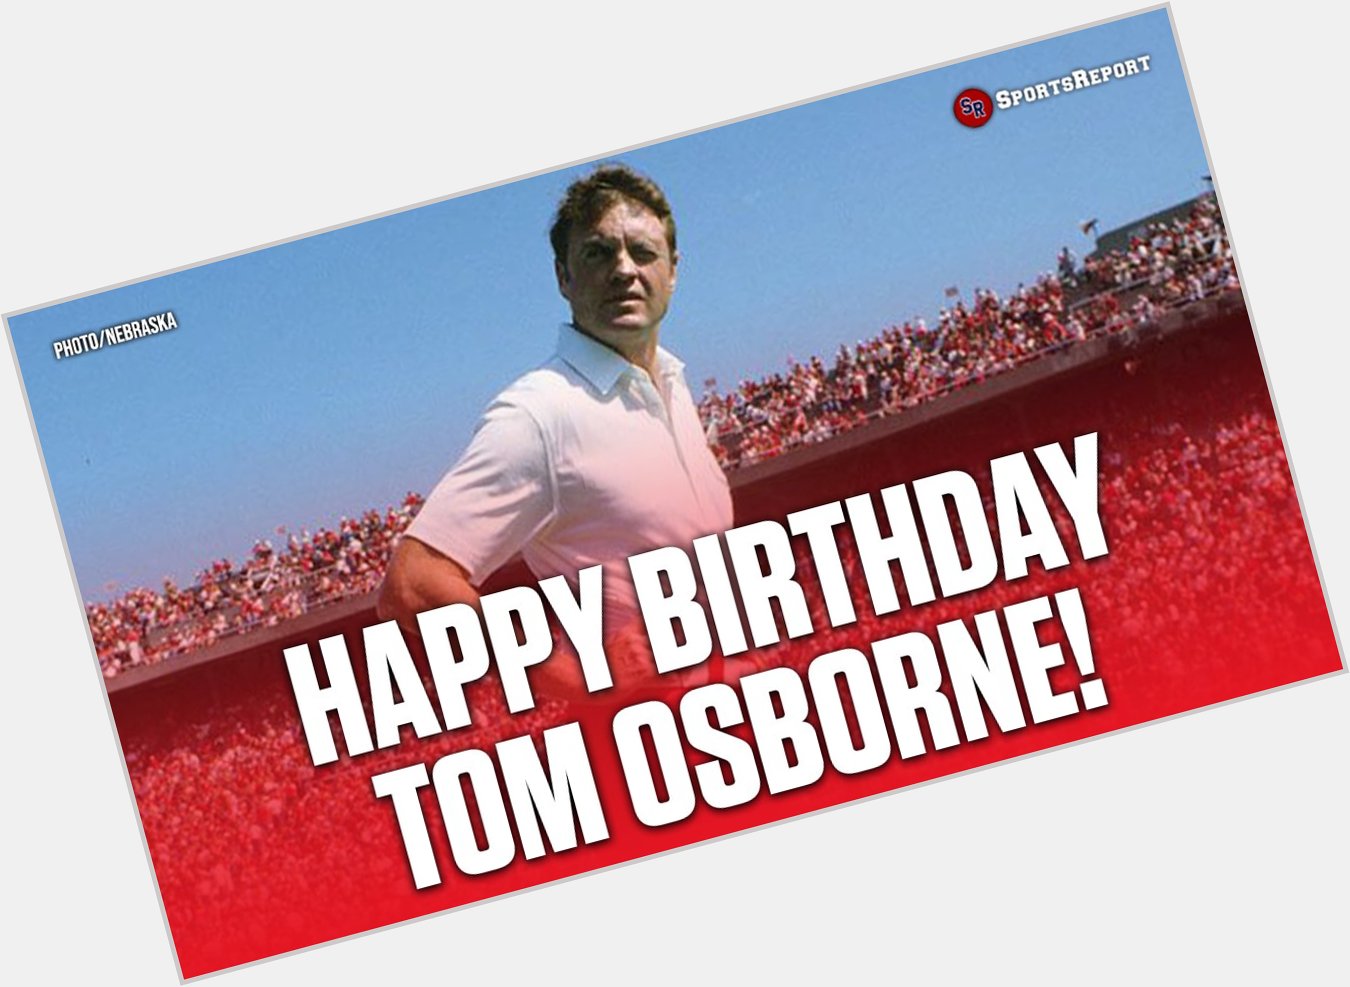  Fans, let\s wish LEGEND Coach Tom Osborne a Happy Birthday! 